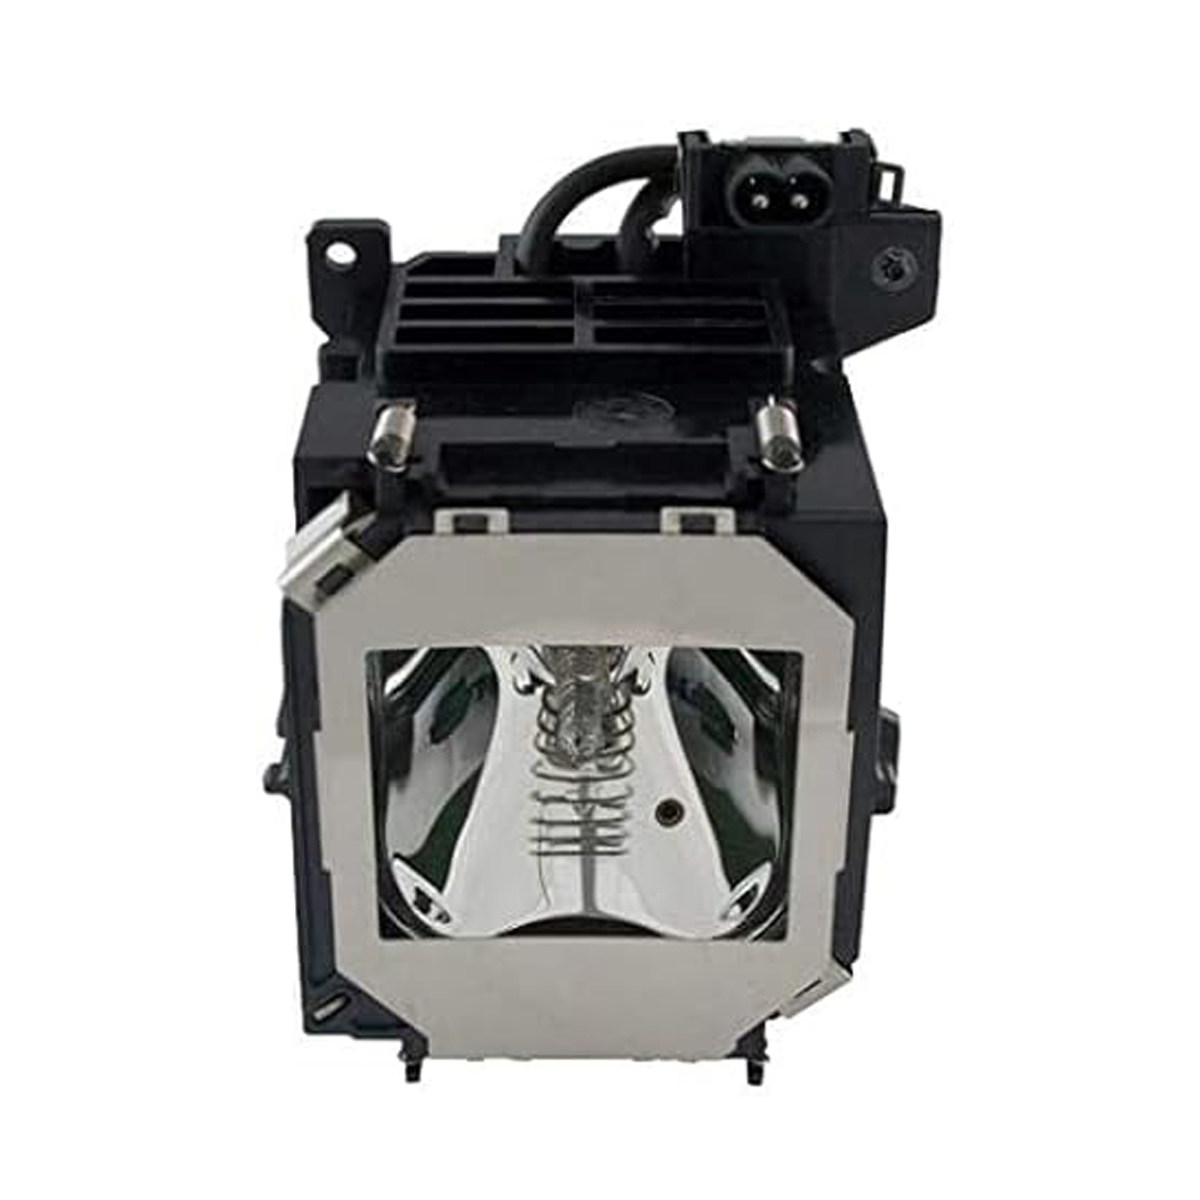 Replacement Projector lamp PJL-520 For YAMAHA LPX 510/LPX-510/ LPX-520